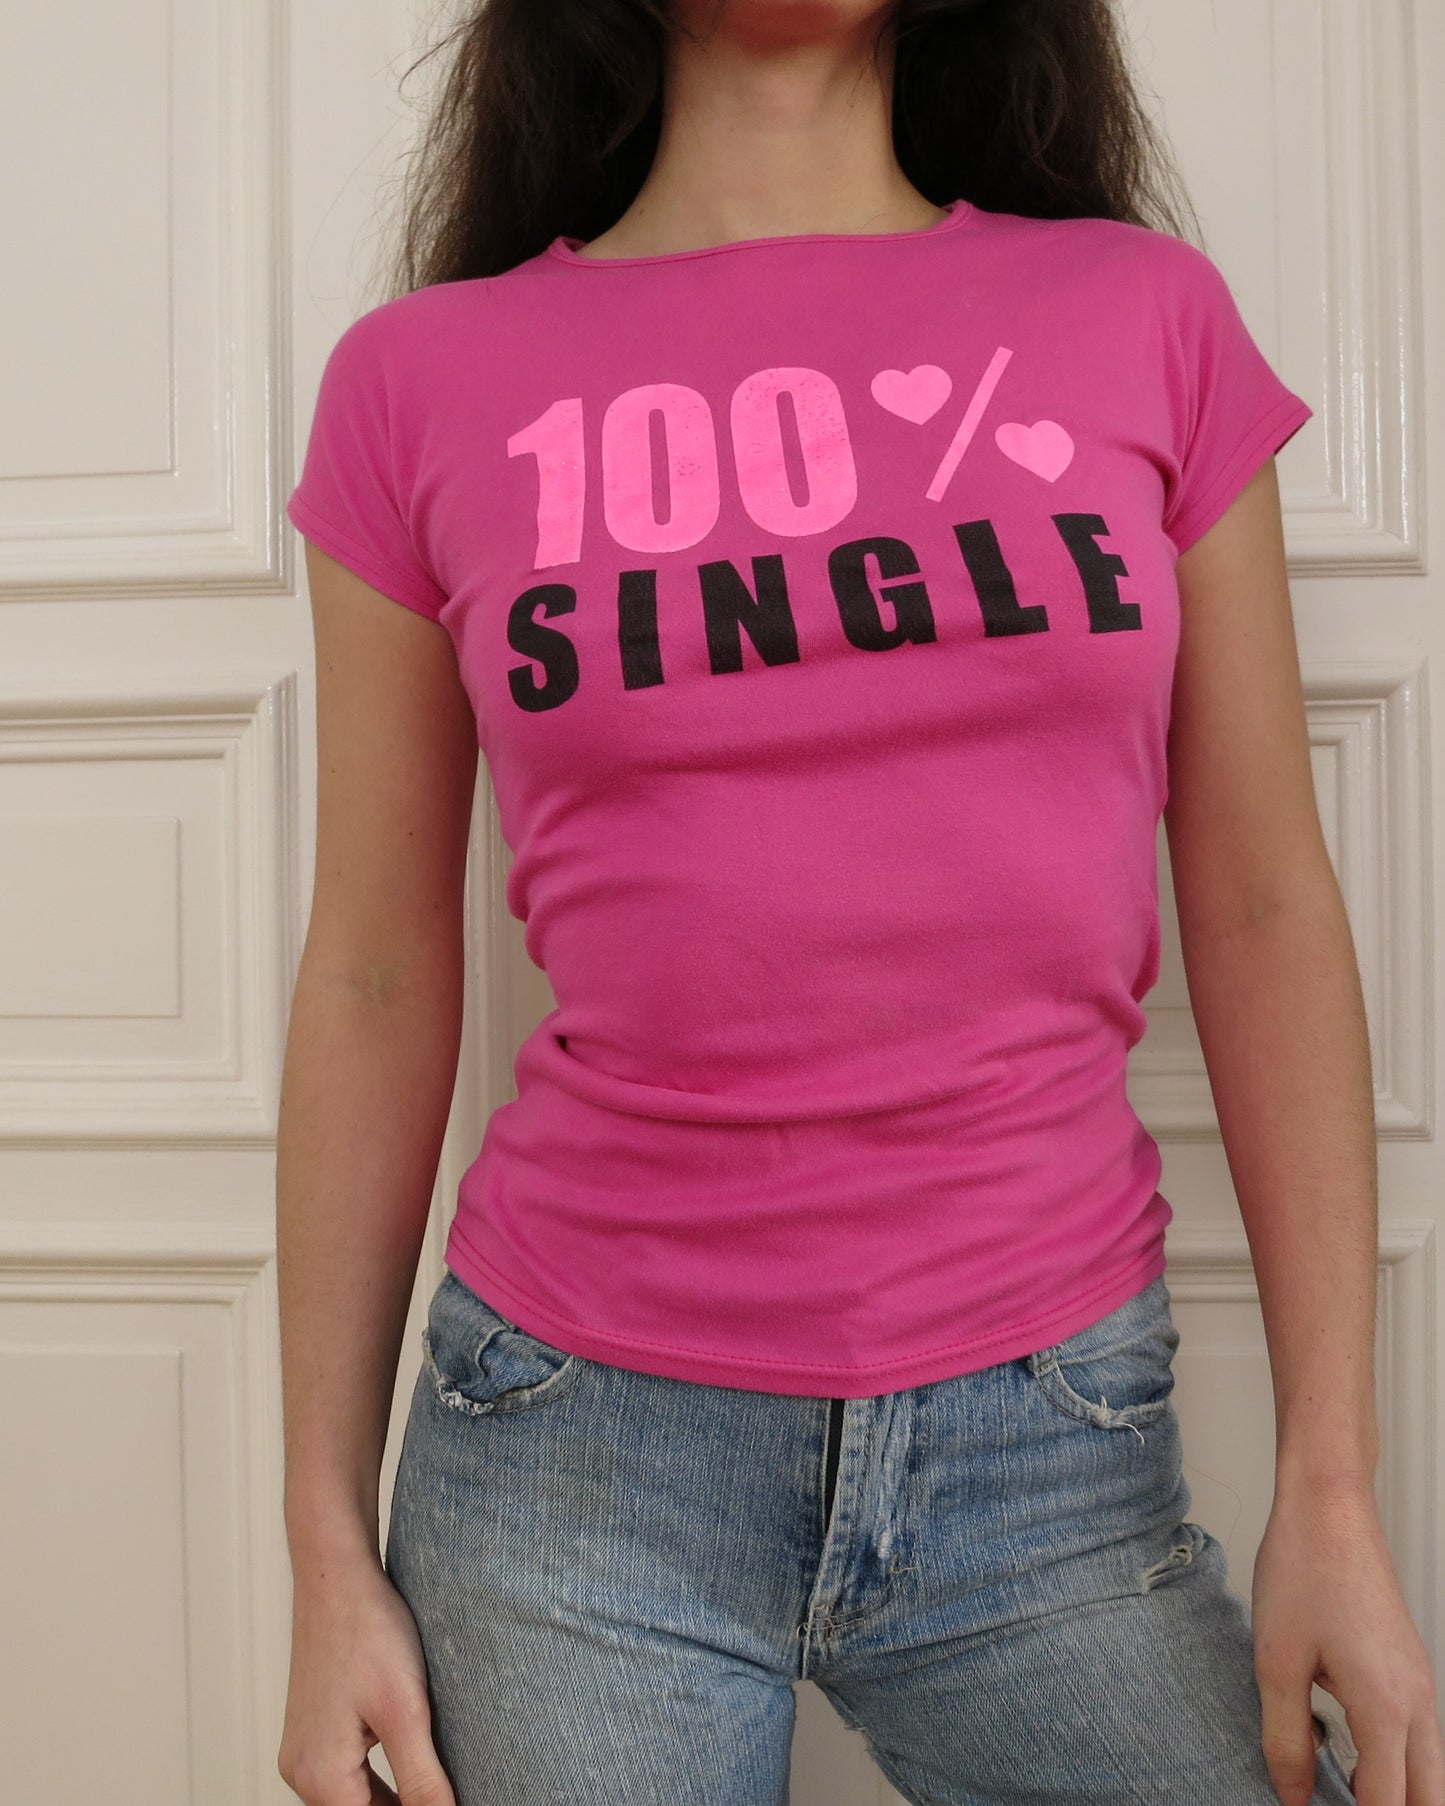 100% Single t-shirt